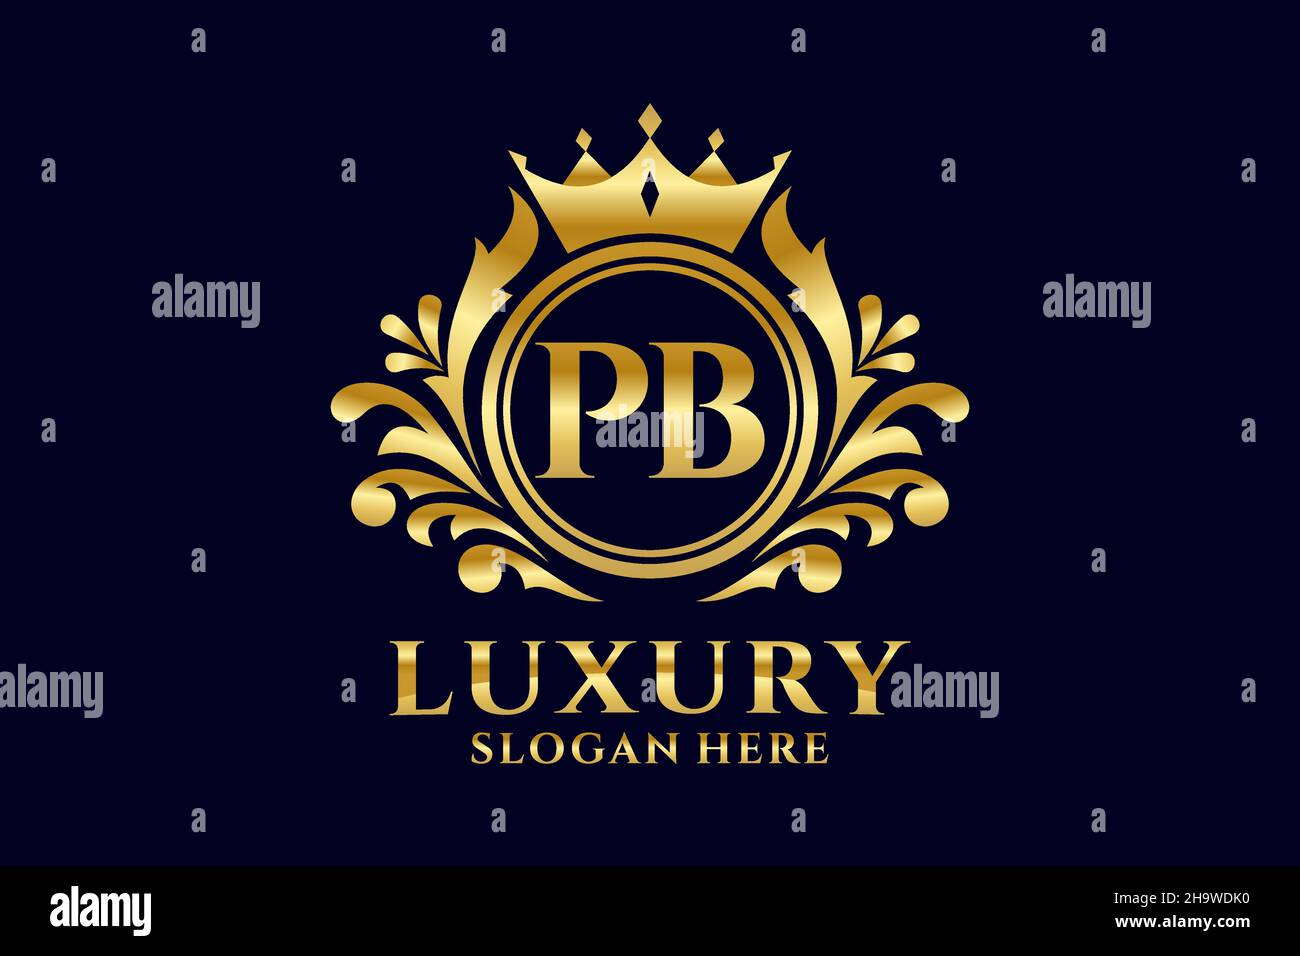 PB Letter Royal Luxury Logo-Vorlage in Vektorgrafik für luxuriöse Branding-Projekte und andere Vektorgrafik. Stock Vektor